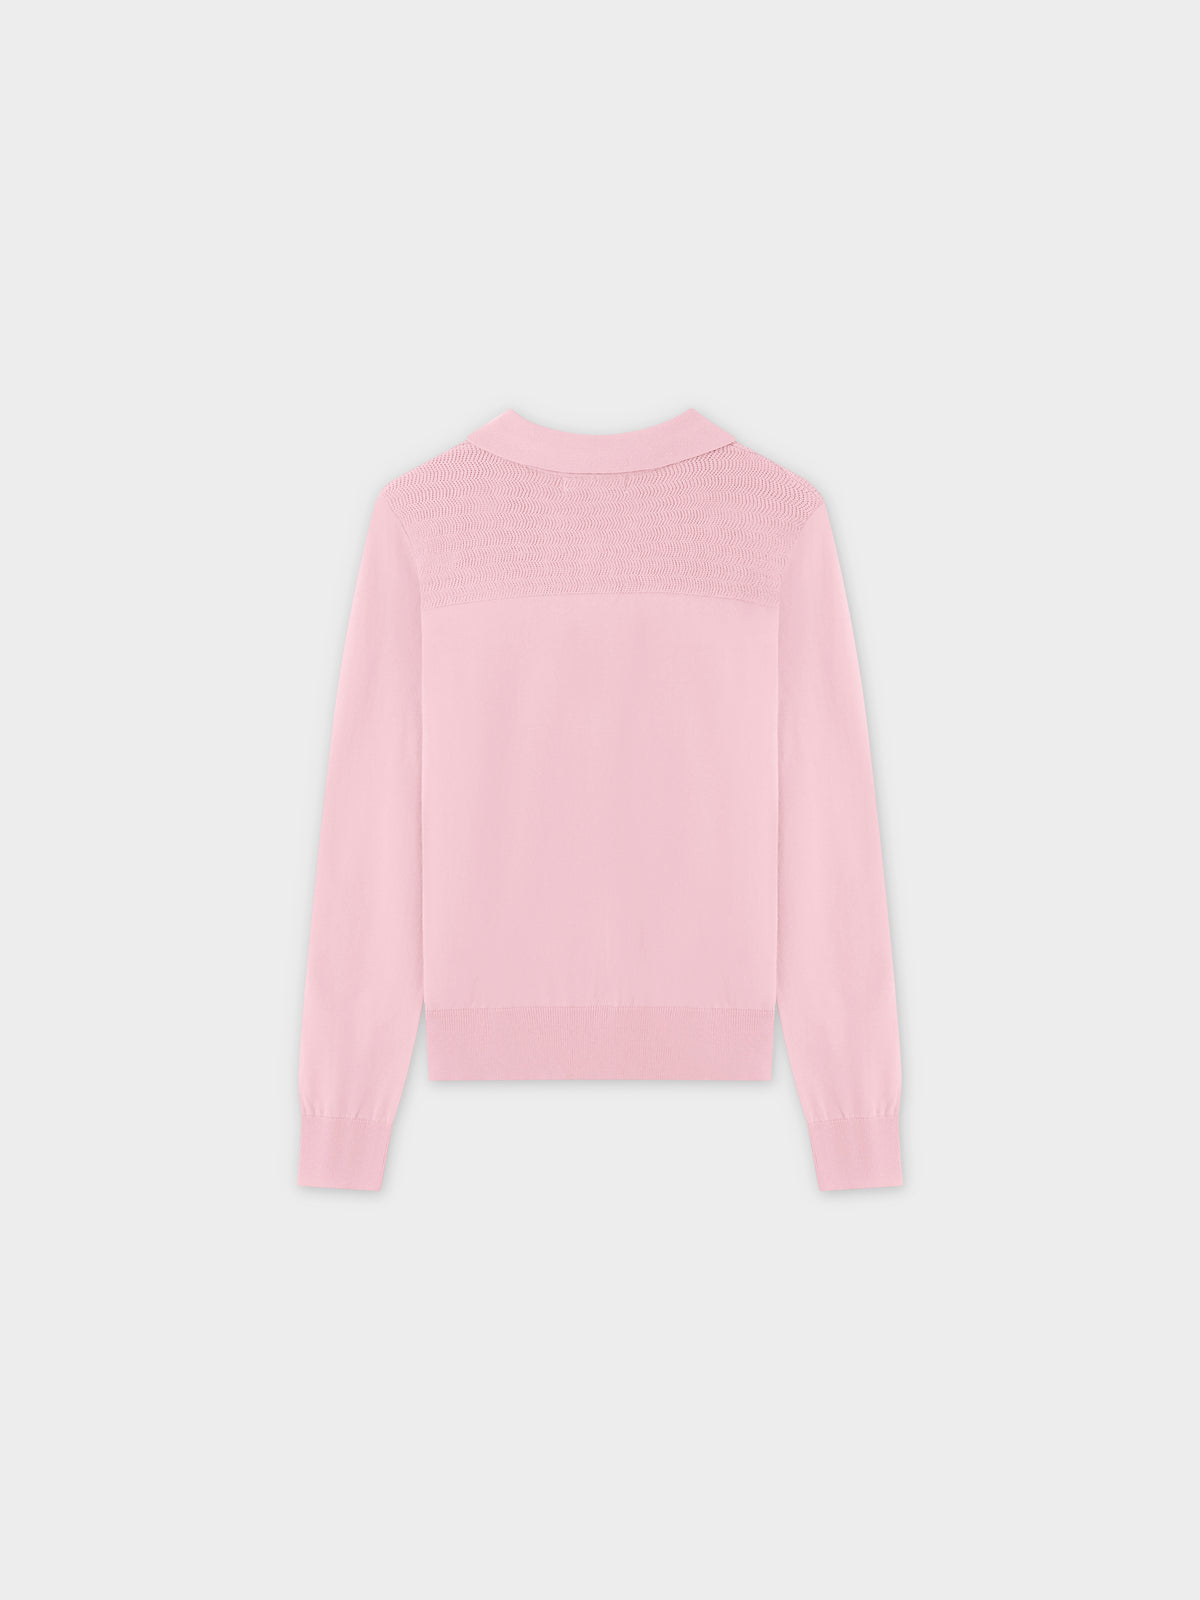 Mesh Top Sweater-Light Pink